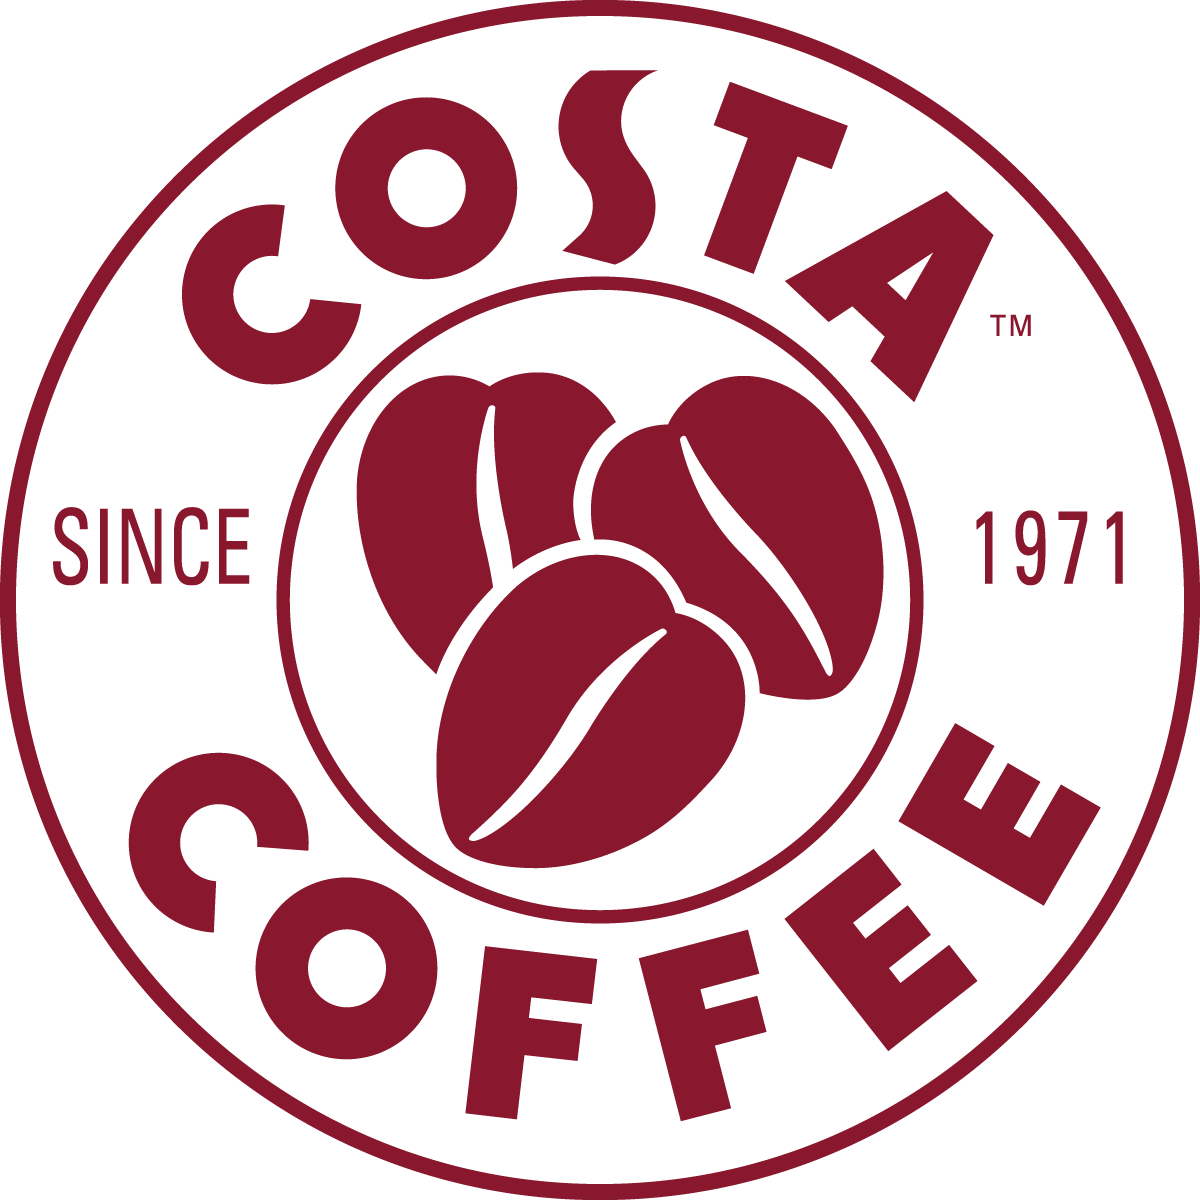 logo costa coffee 1971